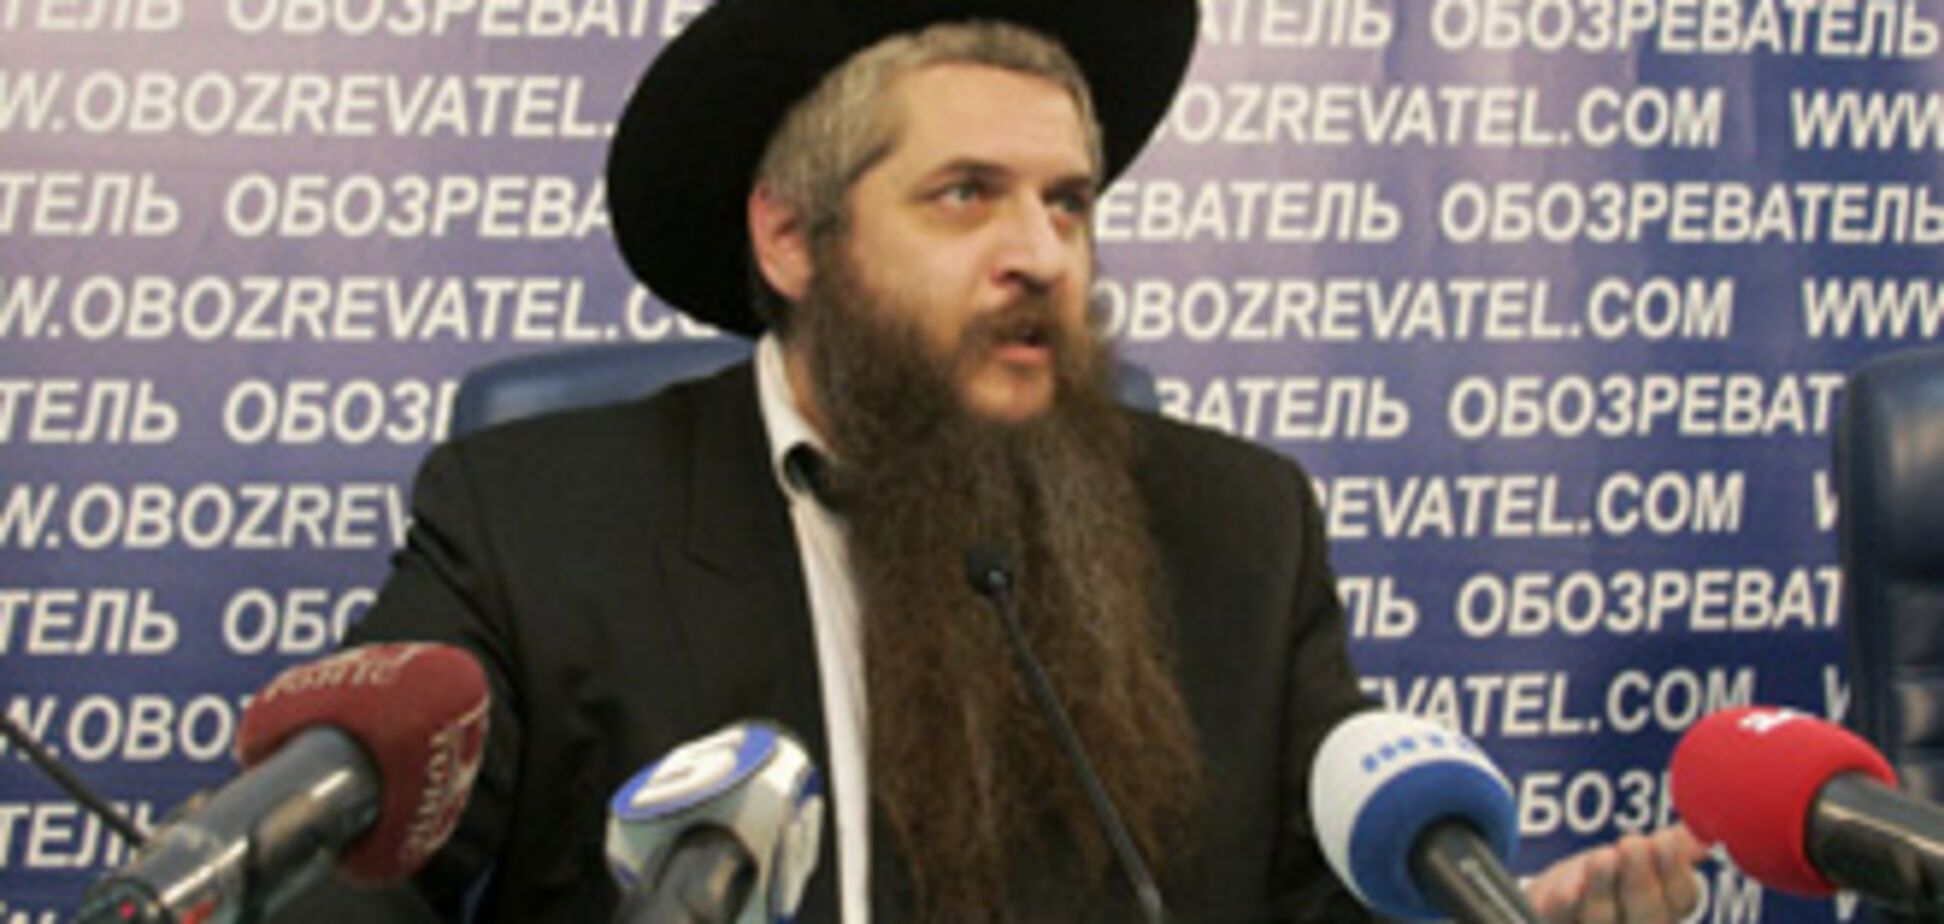 Головний рабин України поверне свій орден через Бандеру